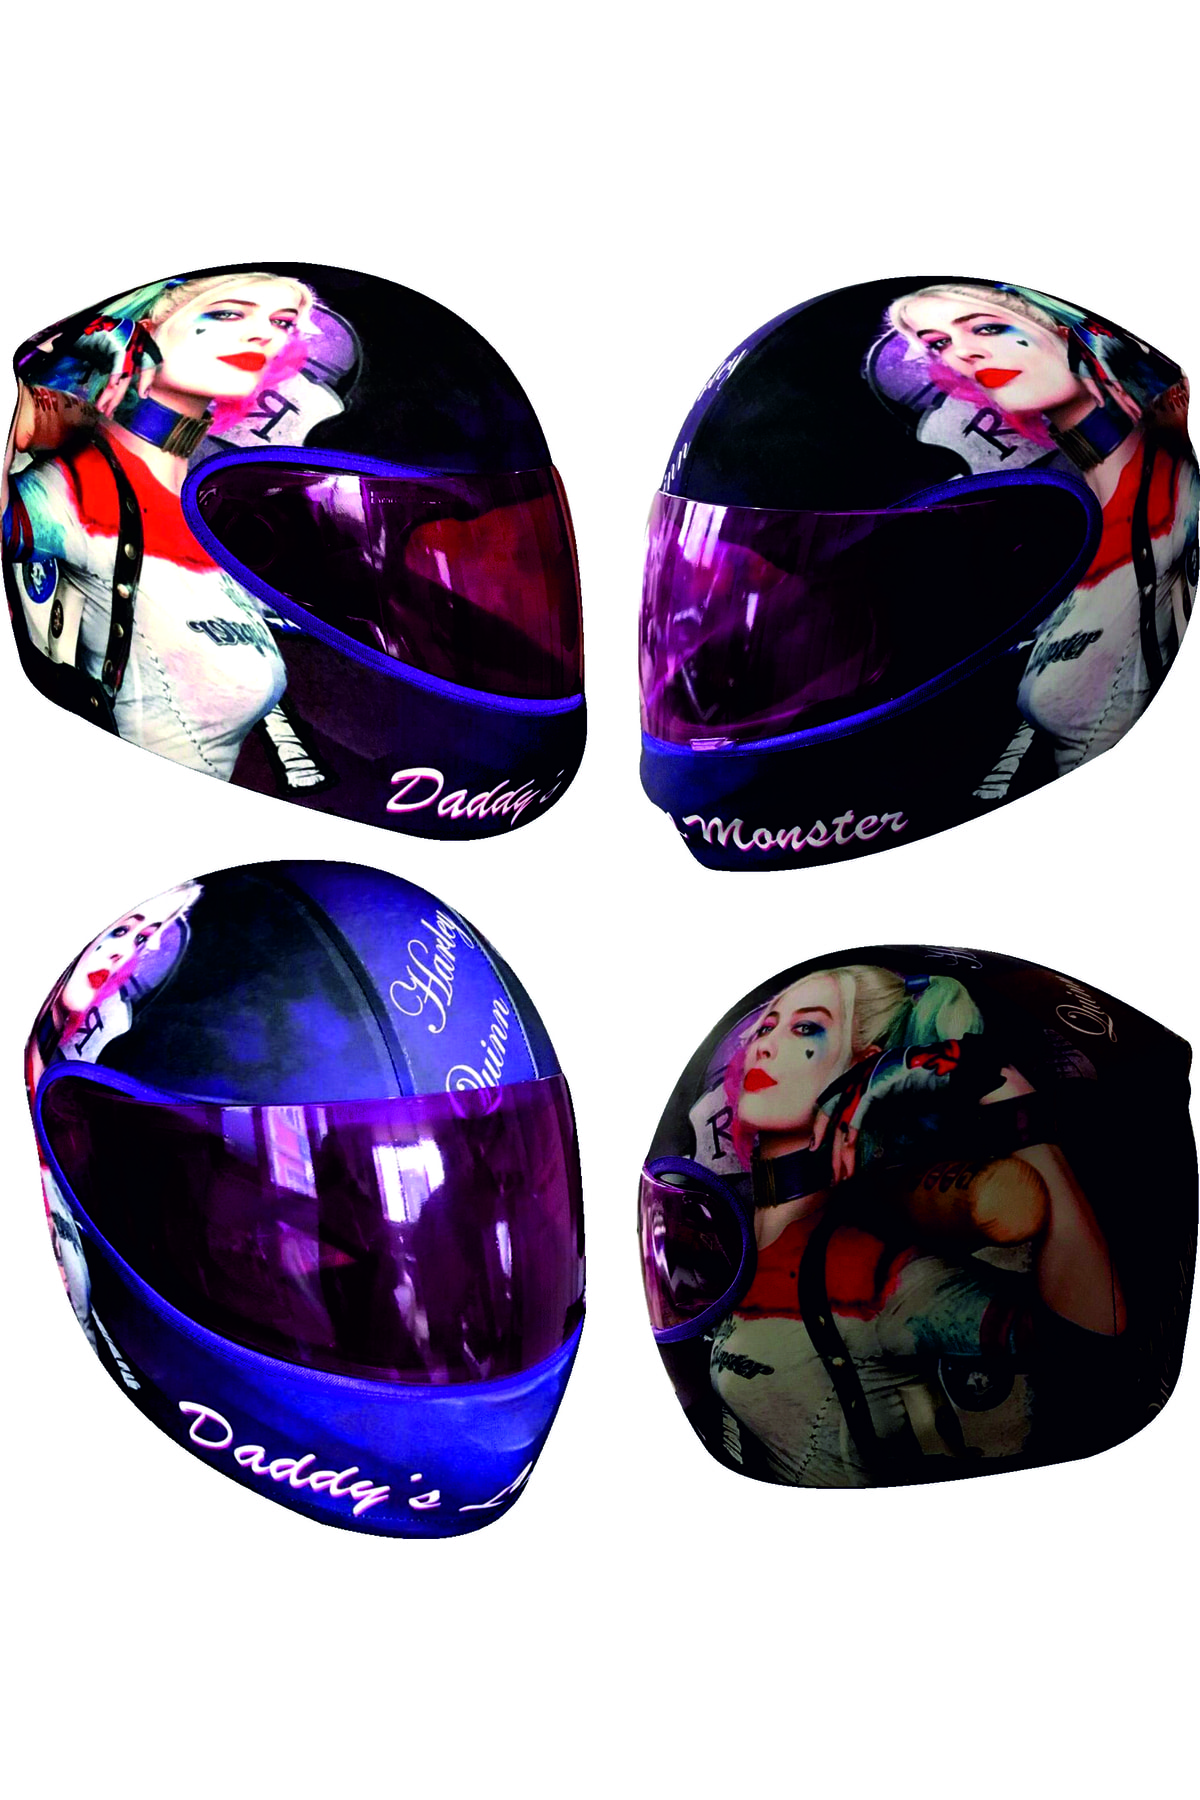 kaskmania Motosiklet Kask Kılıfı Kask Kaplaması Harley Quinn Model (standart Bedendir)